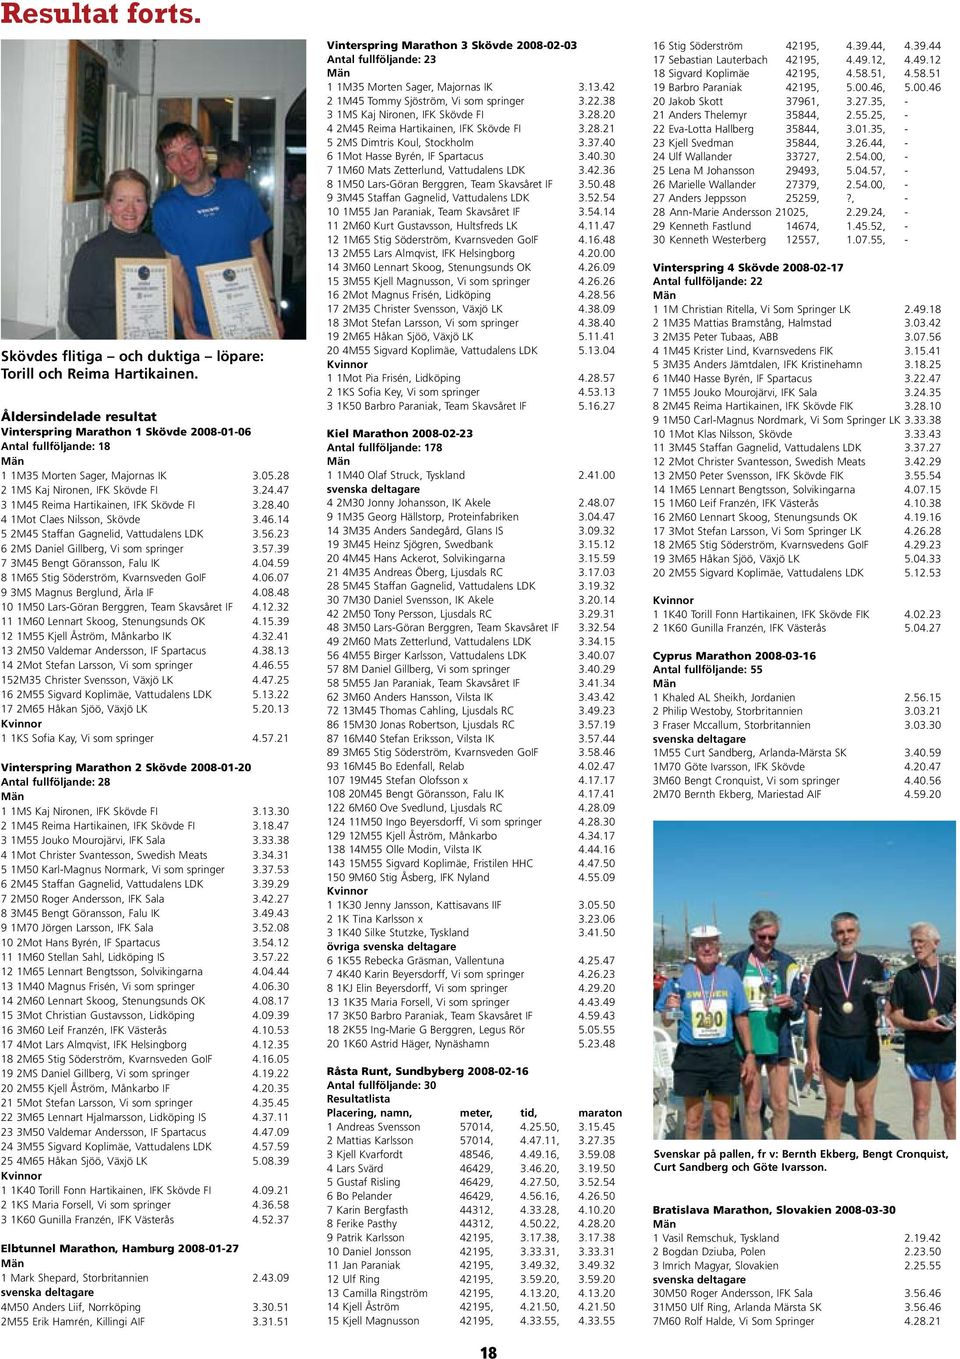 47 3 1M45 Reima Hartikainen, IFK Skövde FI 3.28.40 4 1Mot Claes Nilsson, Skövde 3.46.14 5 2M45 Staffan Gagnelid, Vattudalens LDK 3.56.23 6 2MS Daniel Gillberg, Vi som springer 3.57.